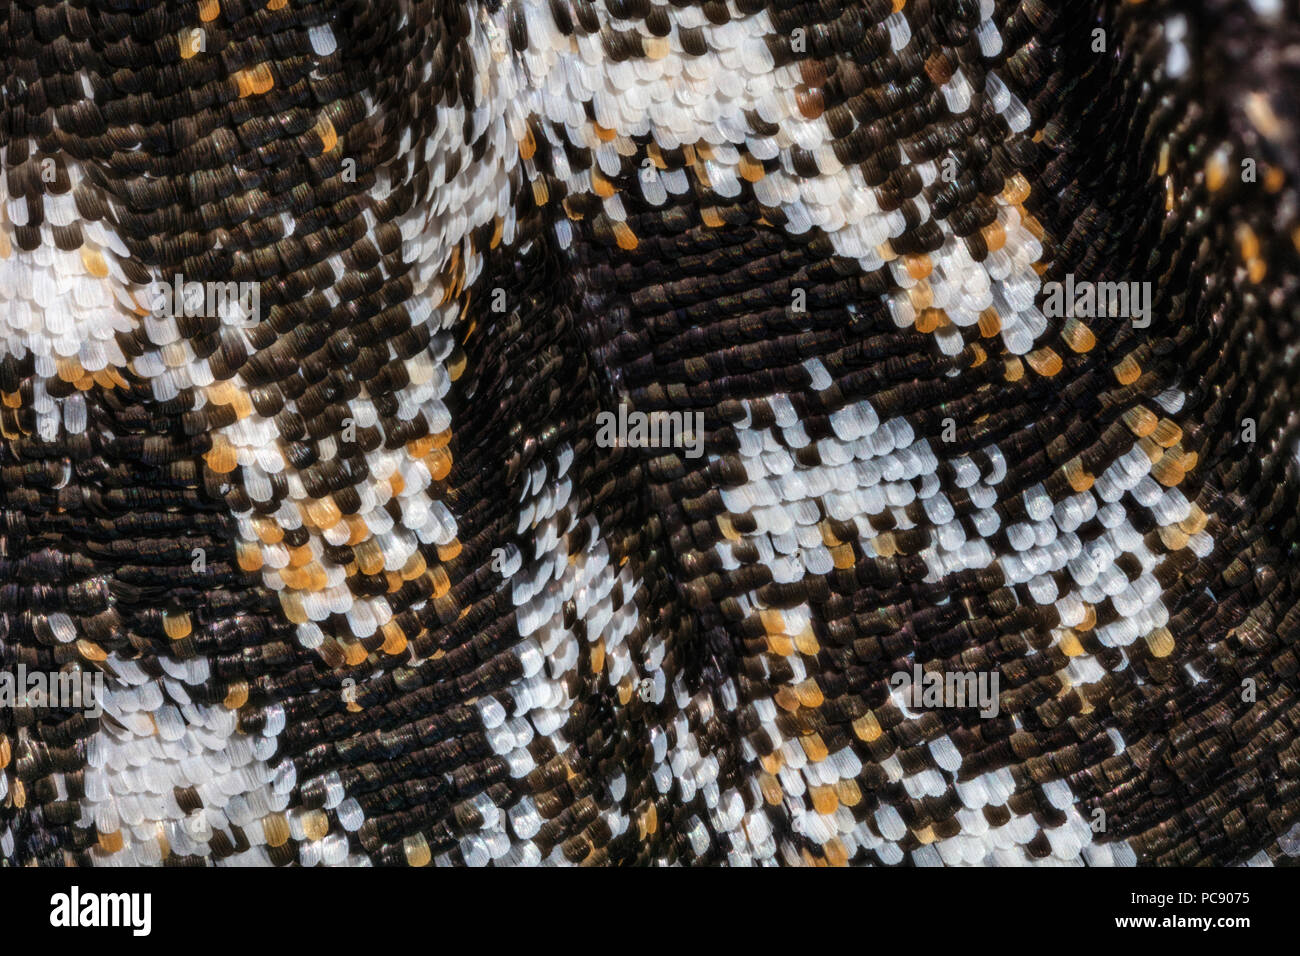 Rustico falena Sfinge Scale di ala a 5x Manduchi rustica rustica dorsale Foto Stock